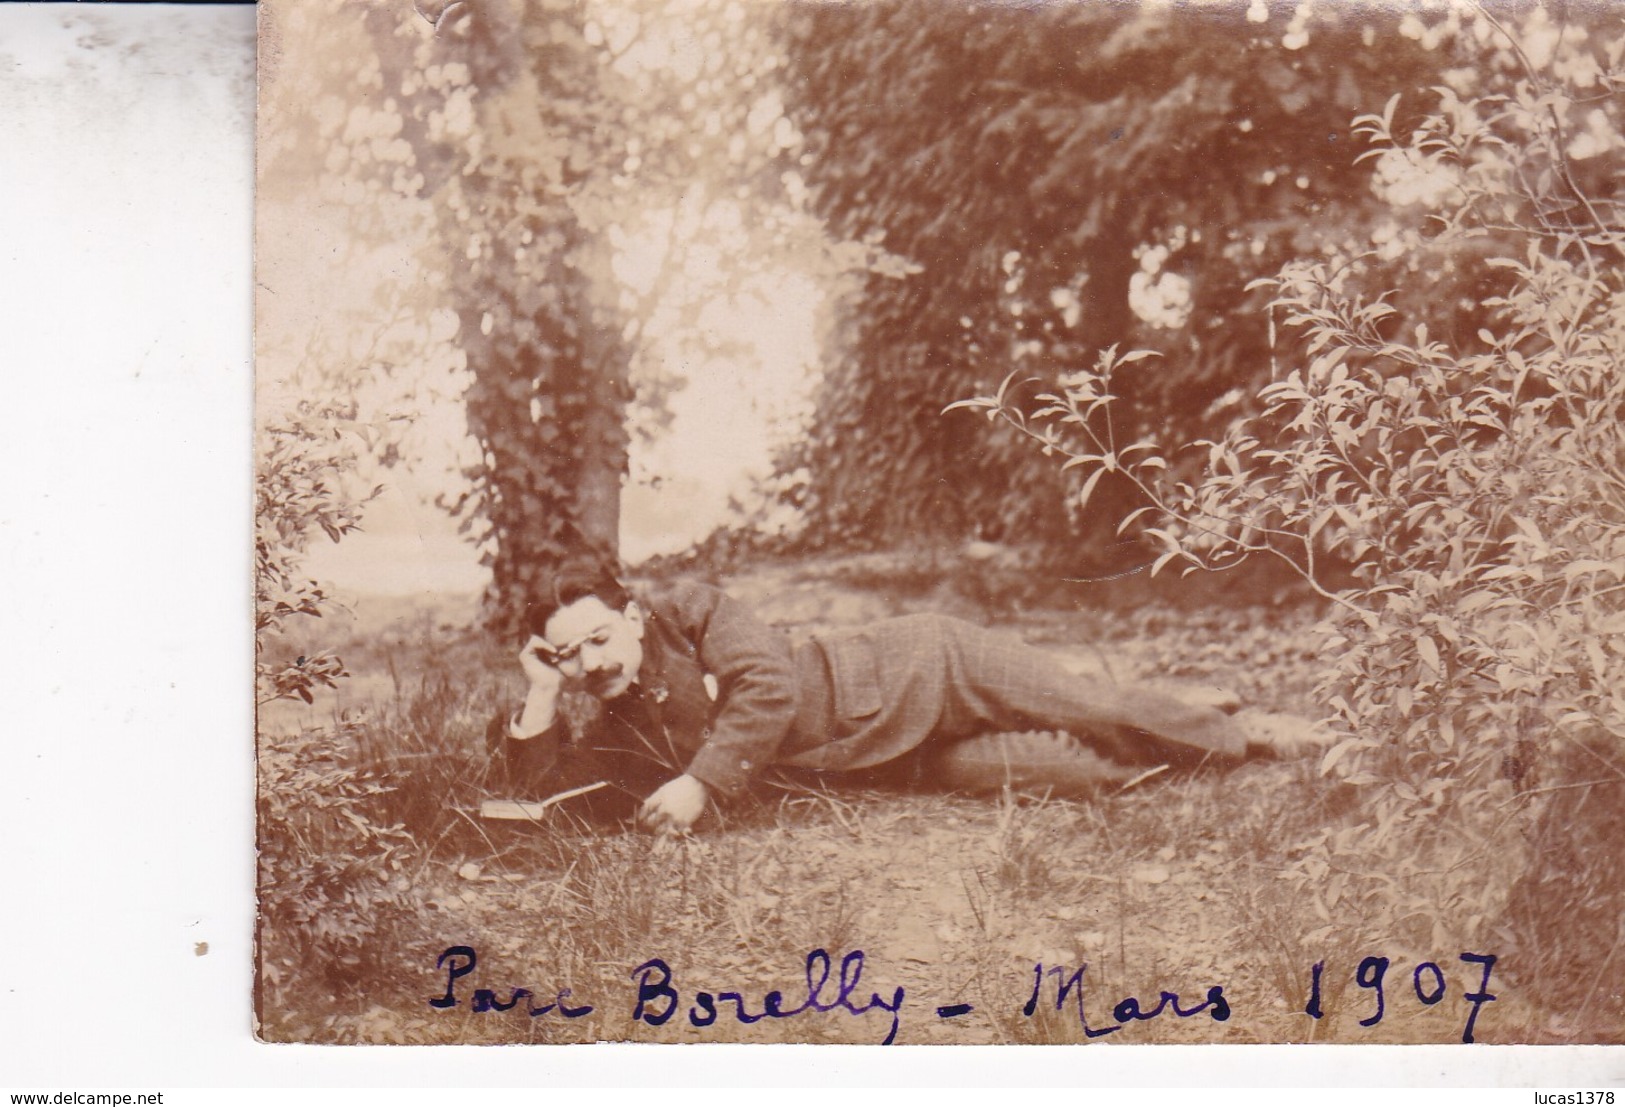 JOLI PHOTO MARSEILLE / PARC BORELY / MARS 1907 - Parks, Gärten